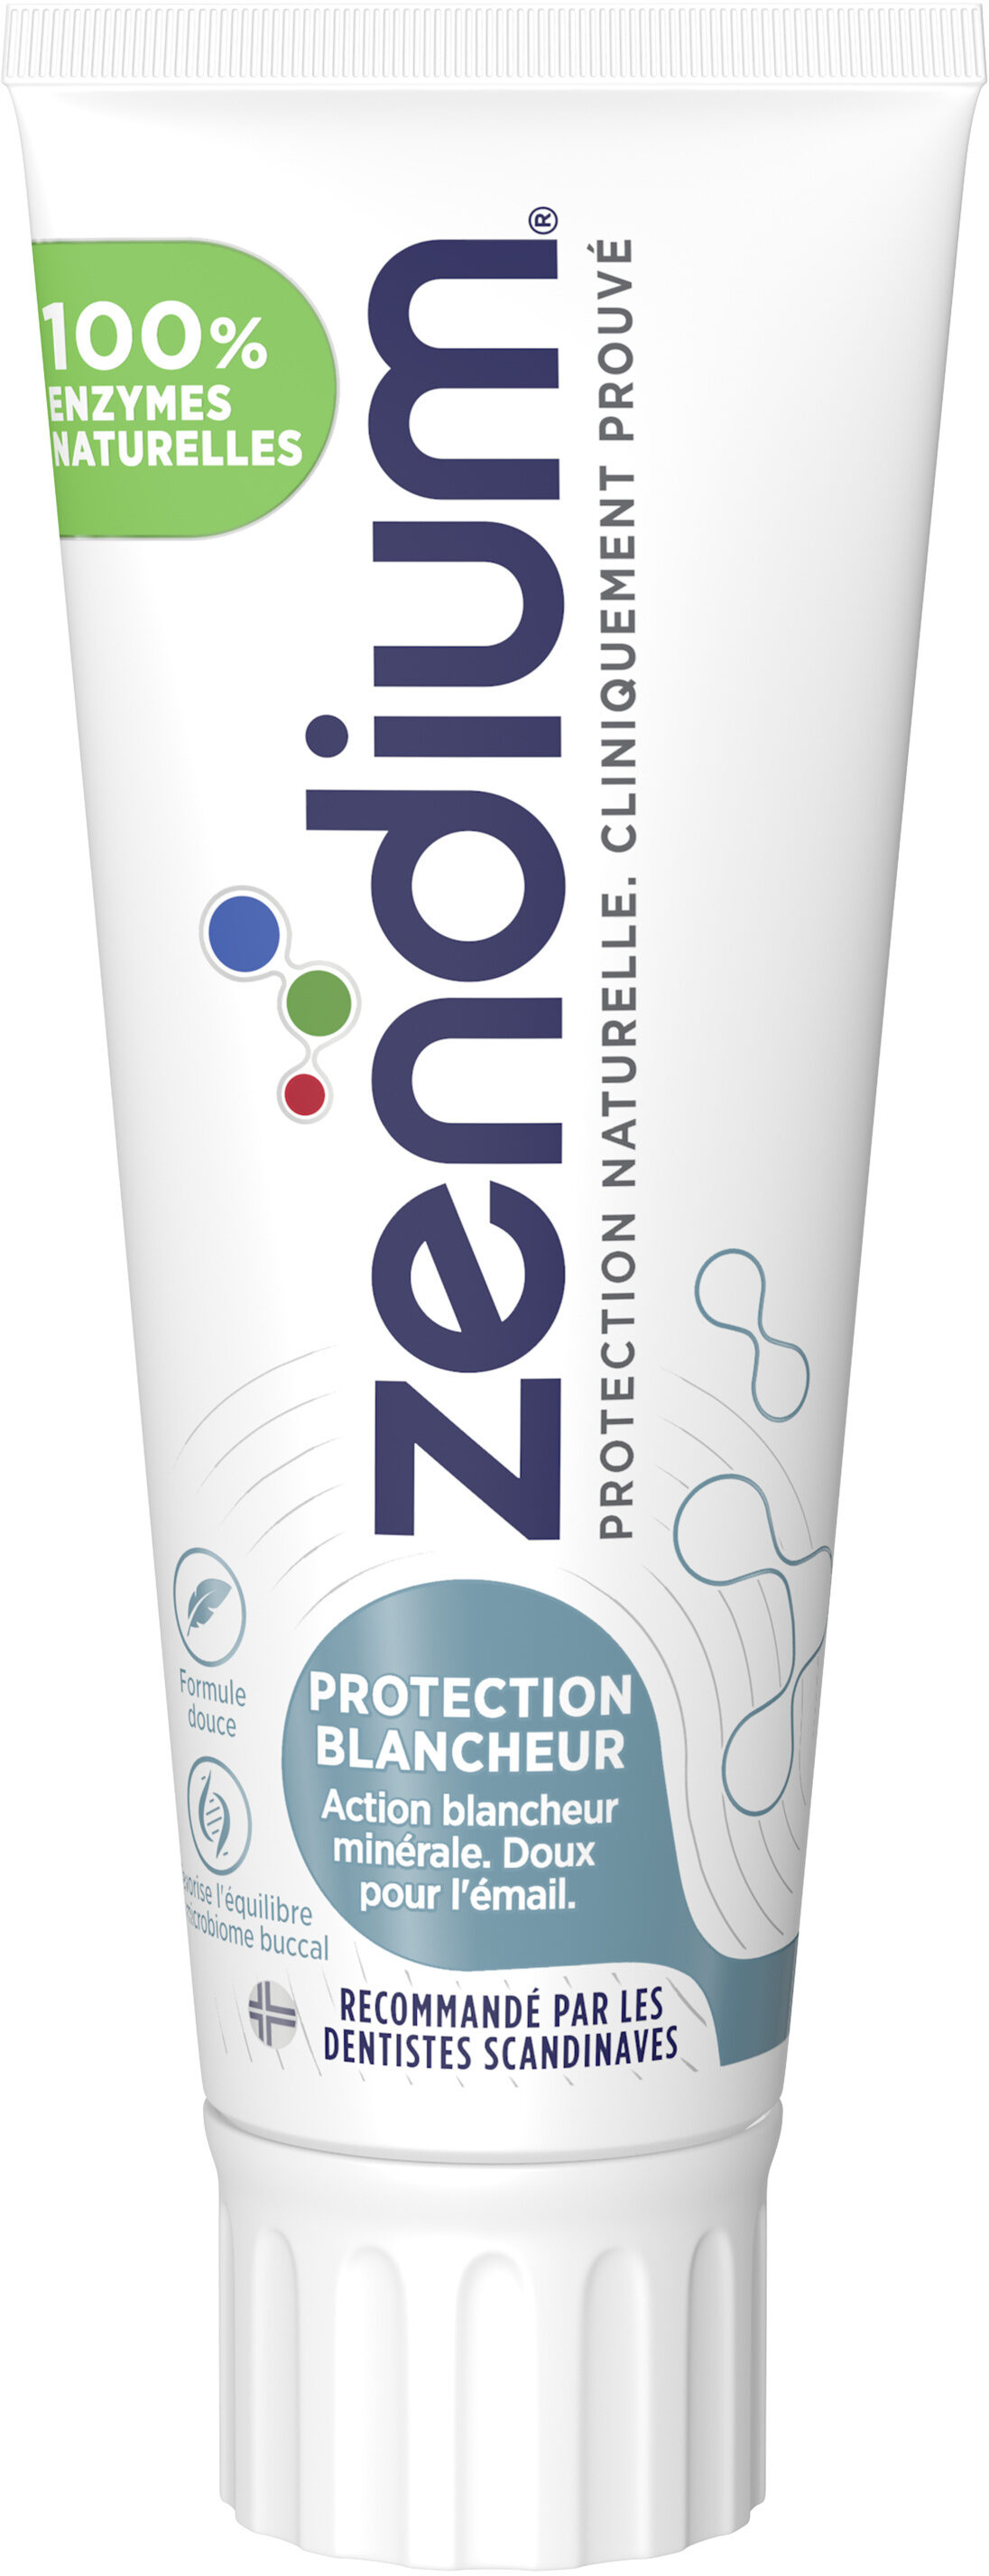 ZENDIUM Dentifrice Protection Blancheur 75ml - Product - fr